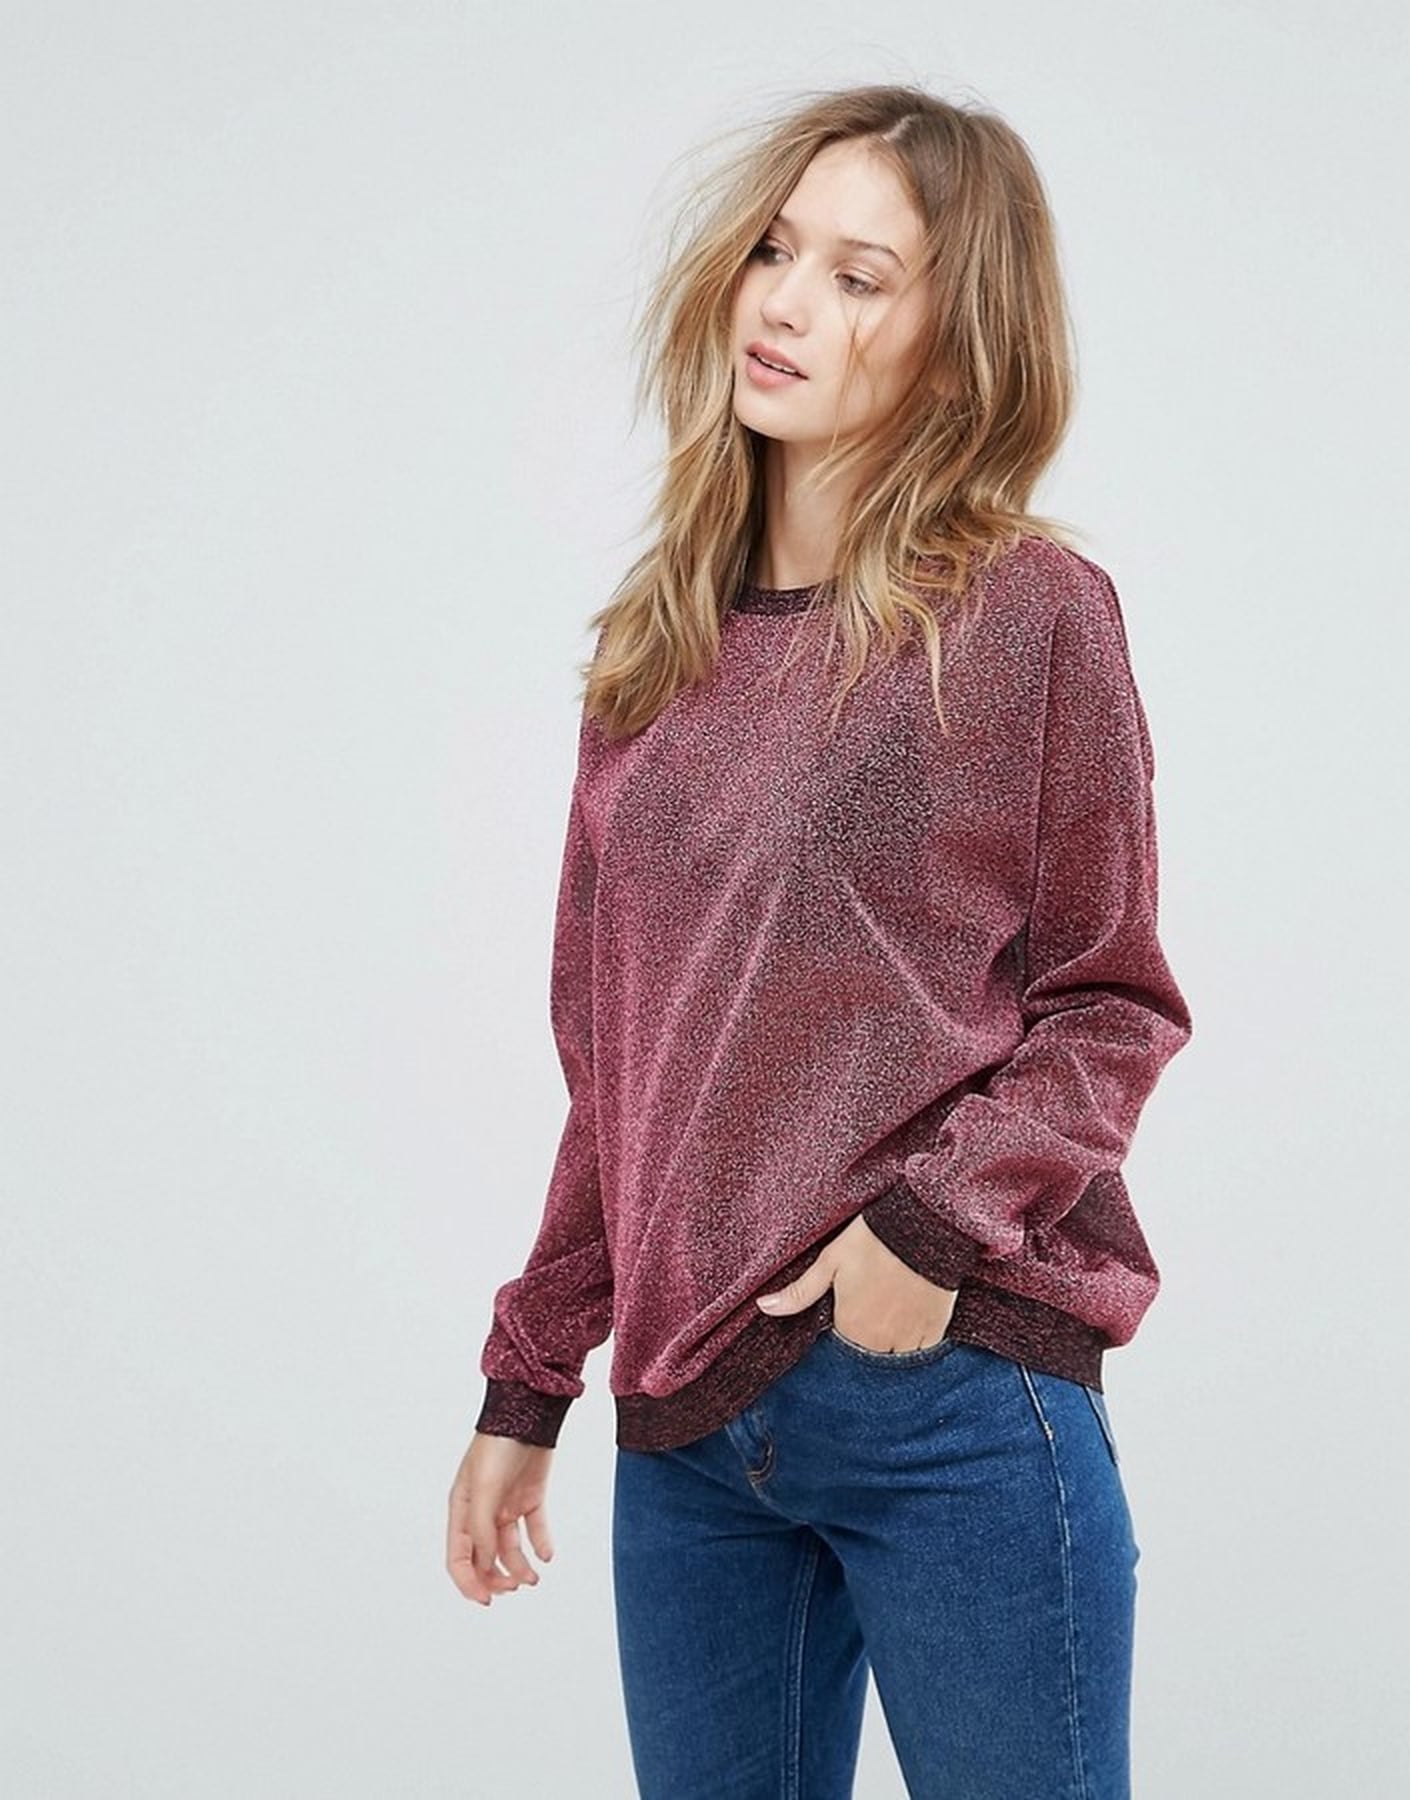 Cheap Holiday Sweaters | POPSUGAR Fashion